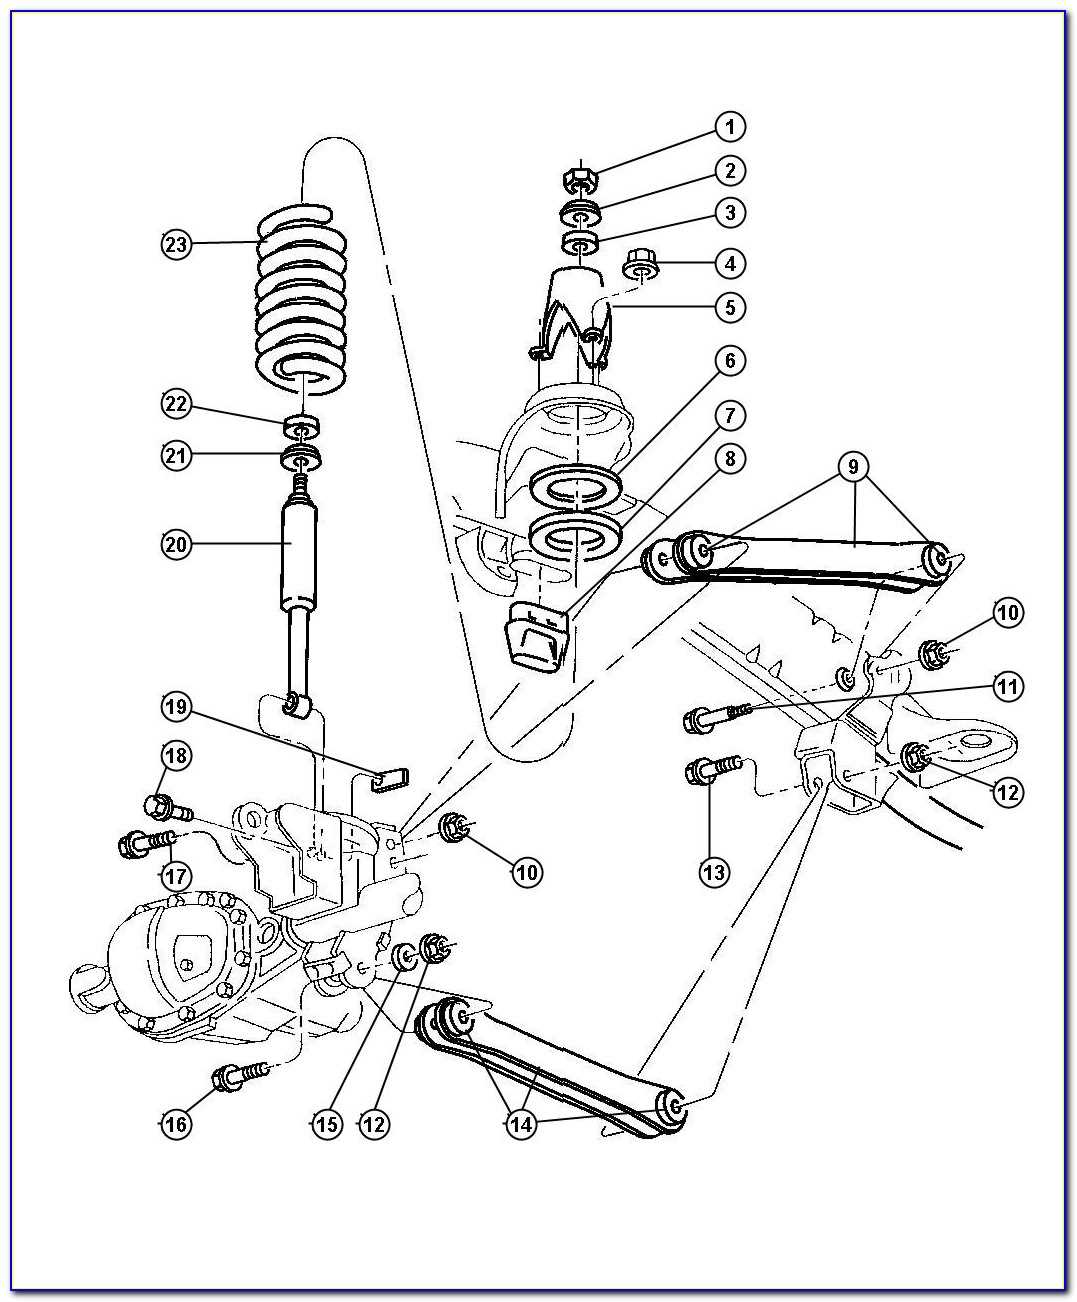 Understanding the Power Steering System in a 2005 Dodge Ram 2500